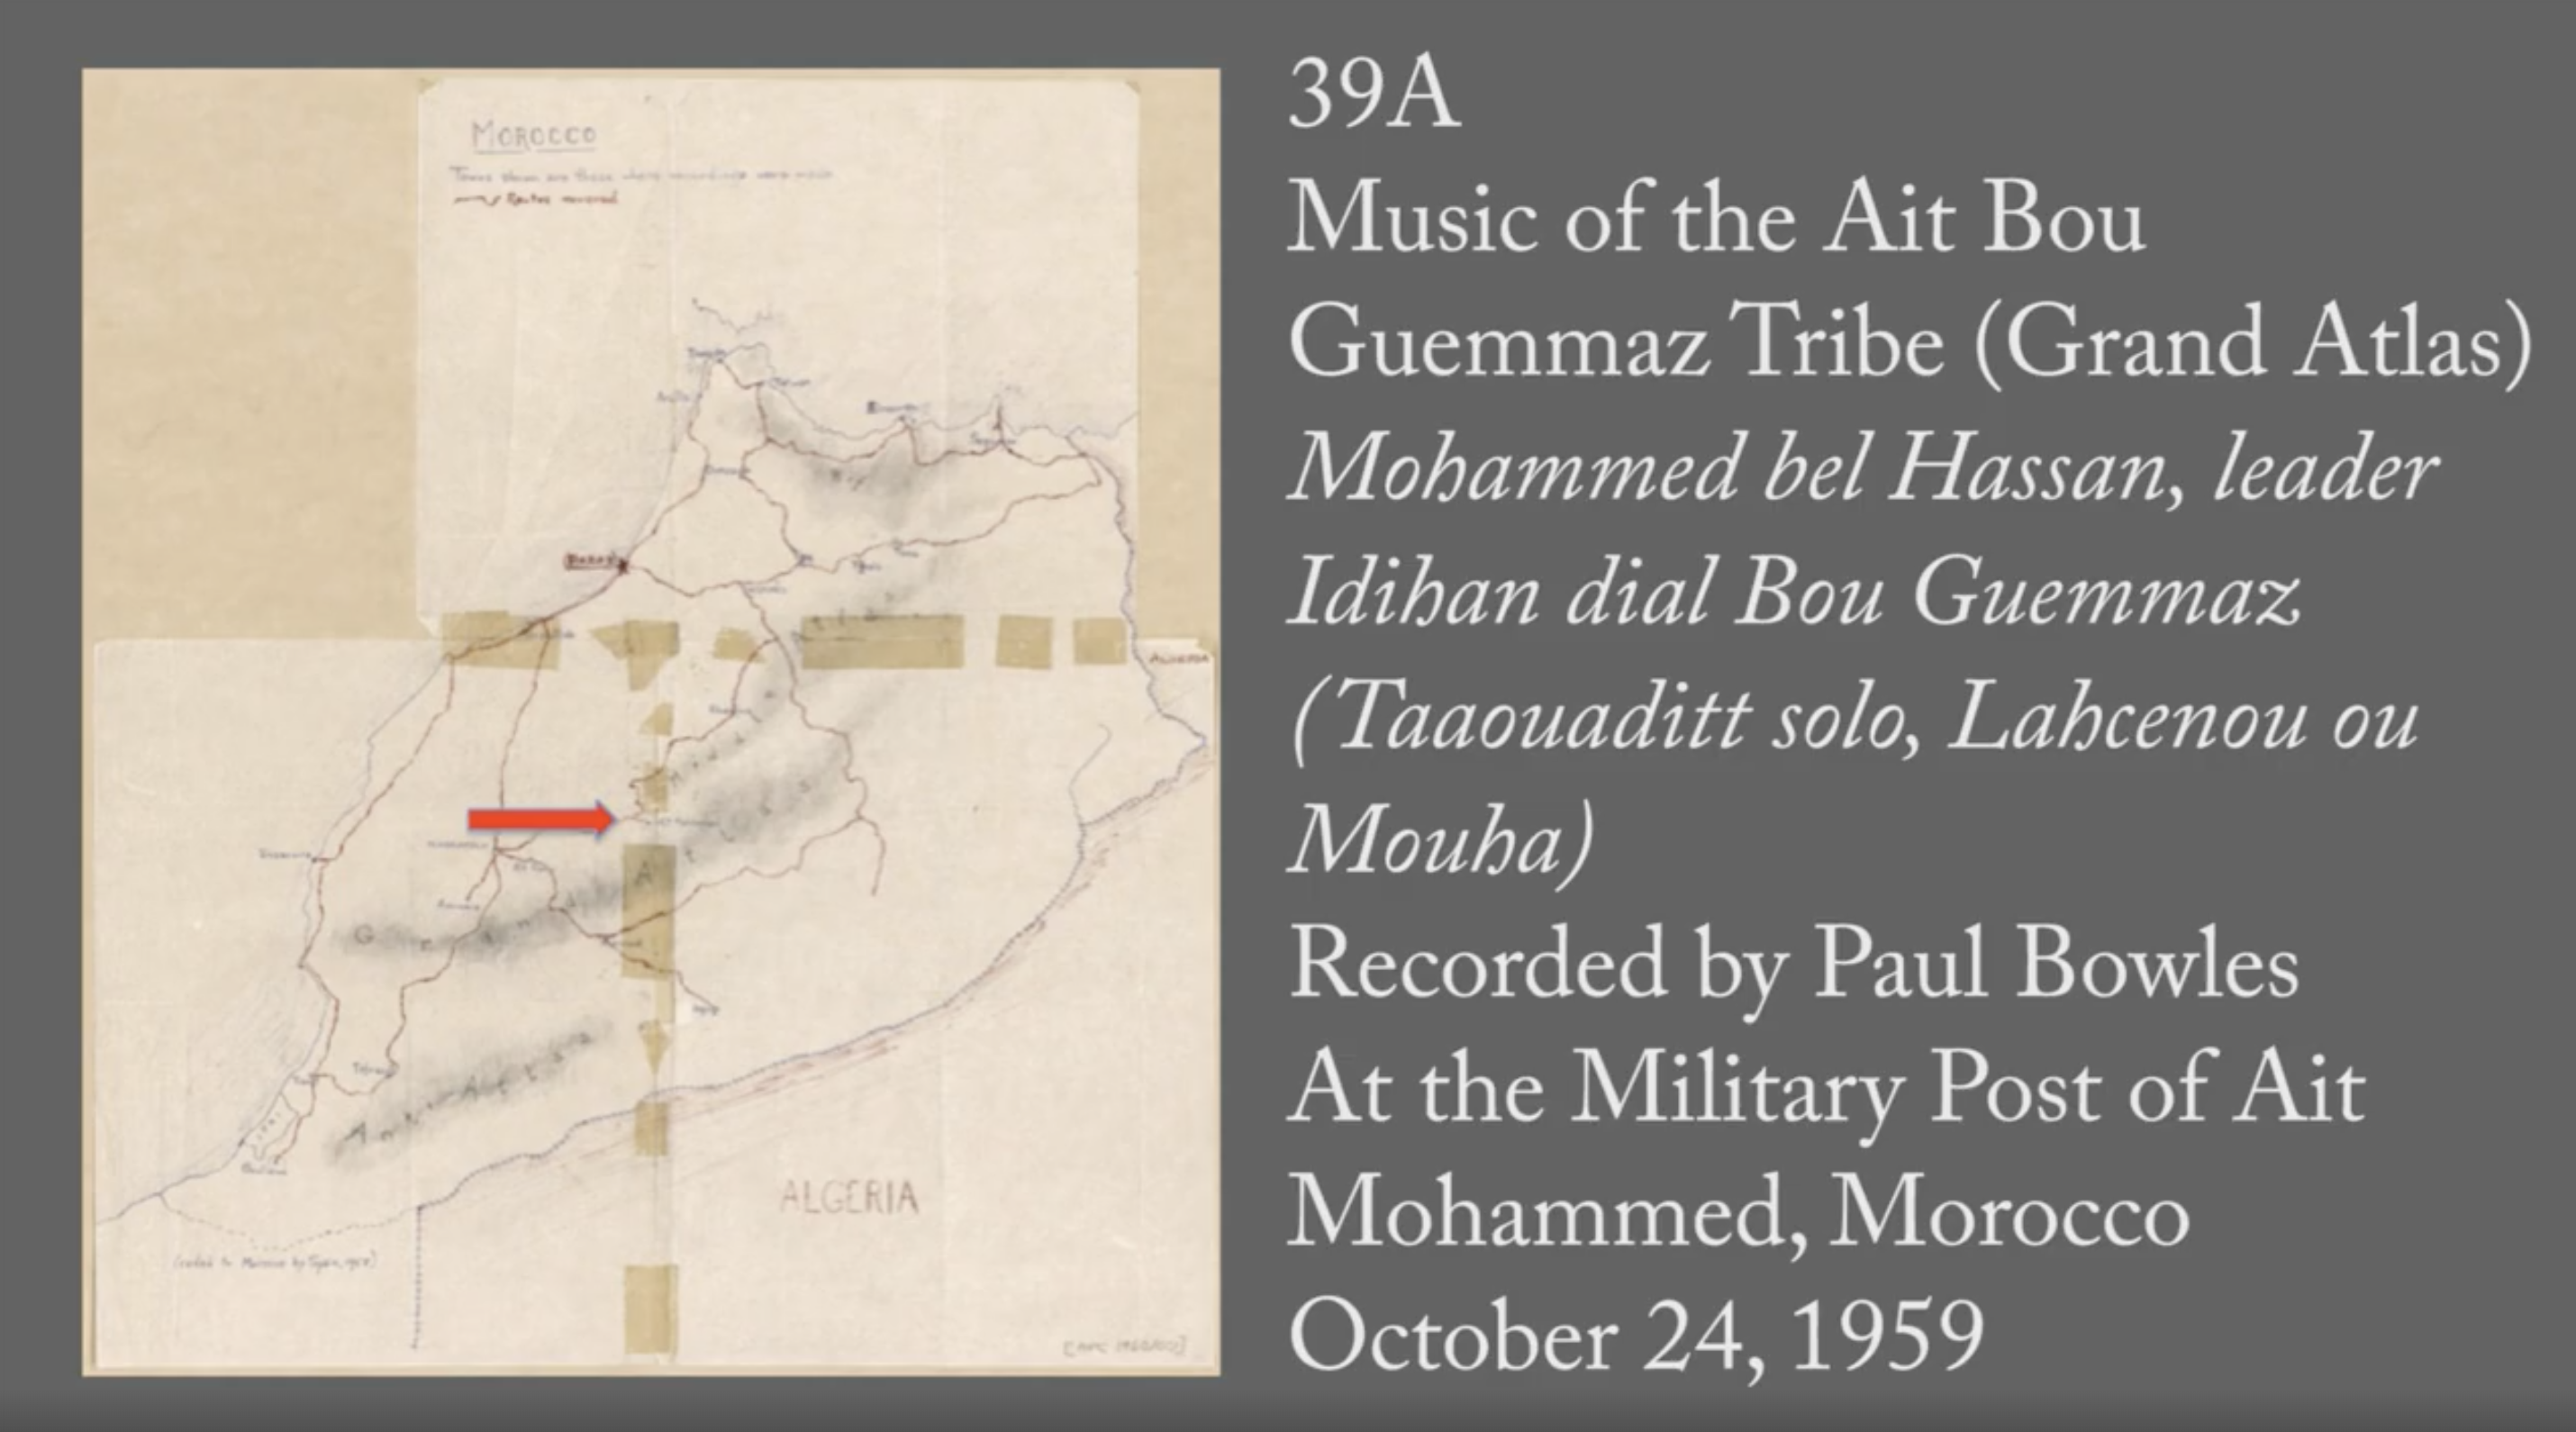 39A: "Idihan dial Bou Guemmaz" (Music of the Ait Bou Guemmaz Tribe)